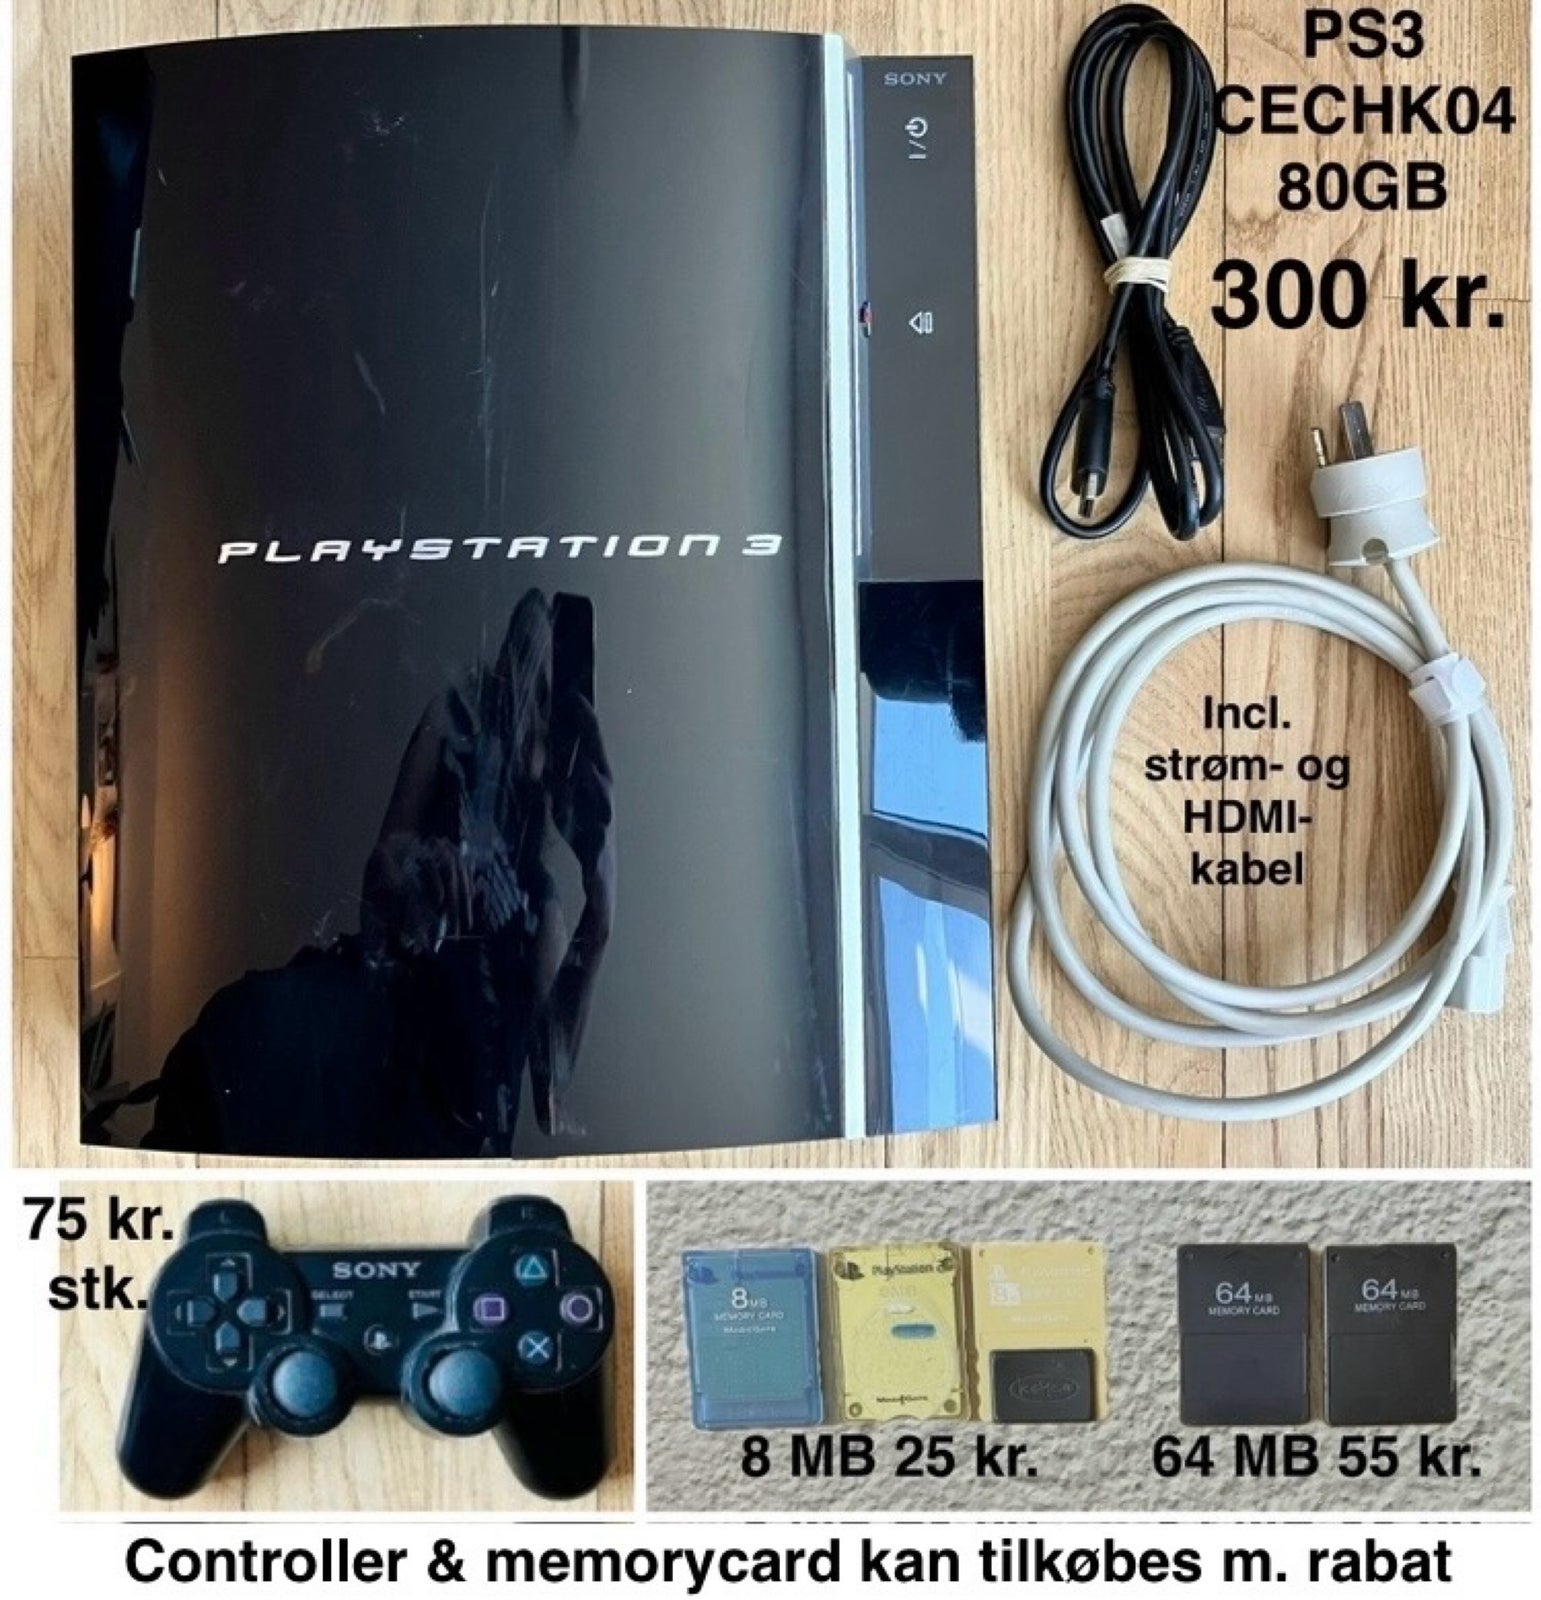 Playstation 3, PS3 CECHK04 + rabat på tilkøbsprodukter,